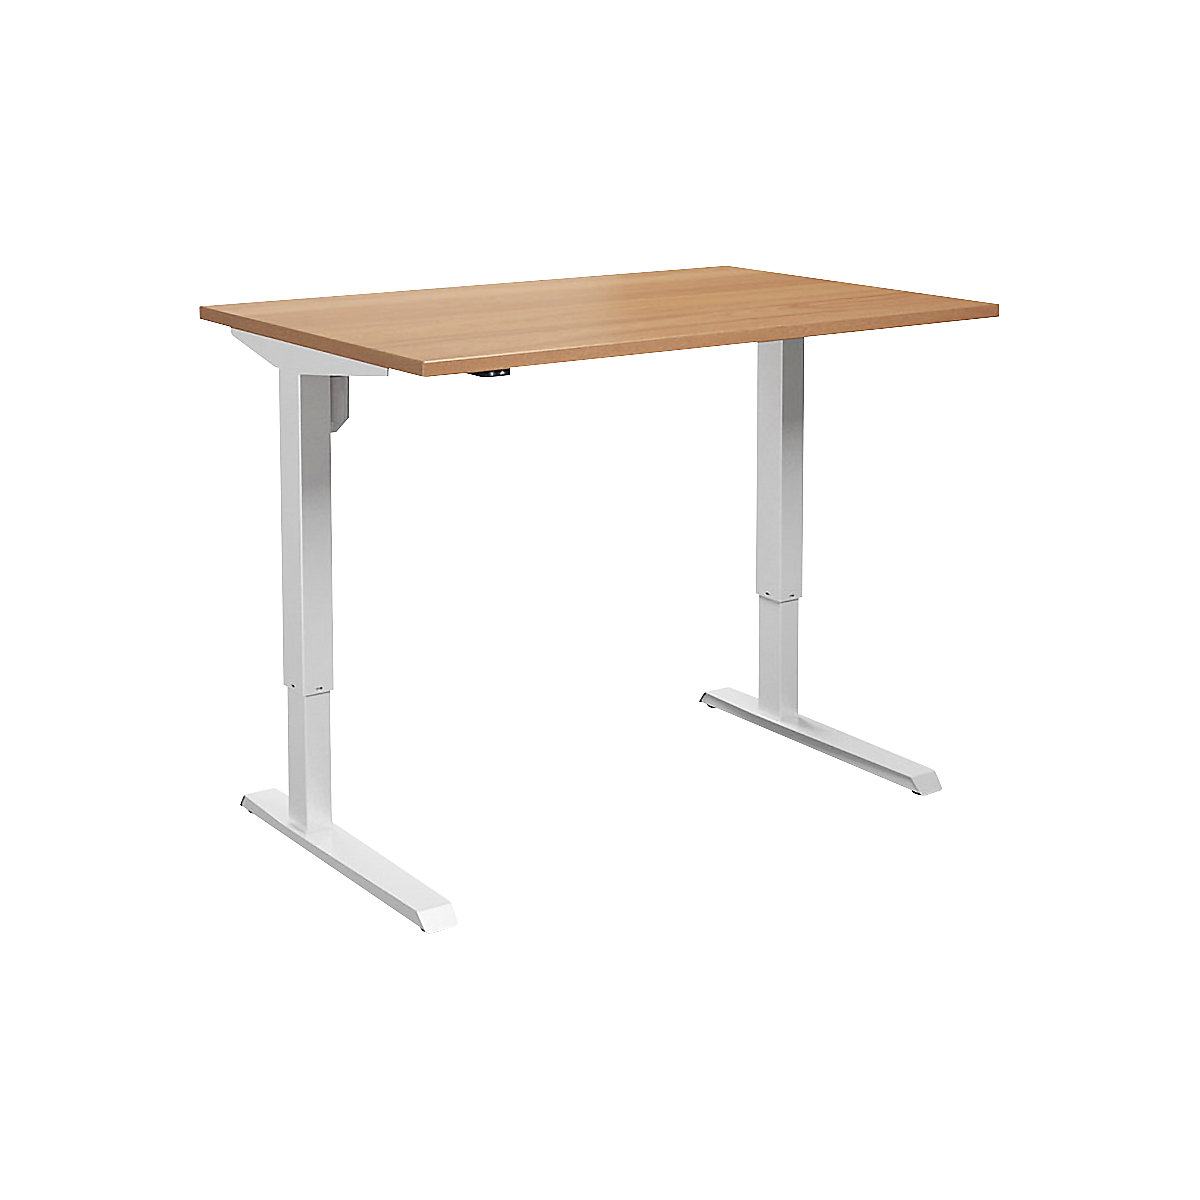 Venla desk, electrically height adjustable - eurokraft basic